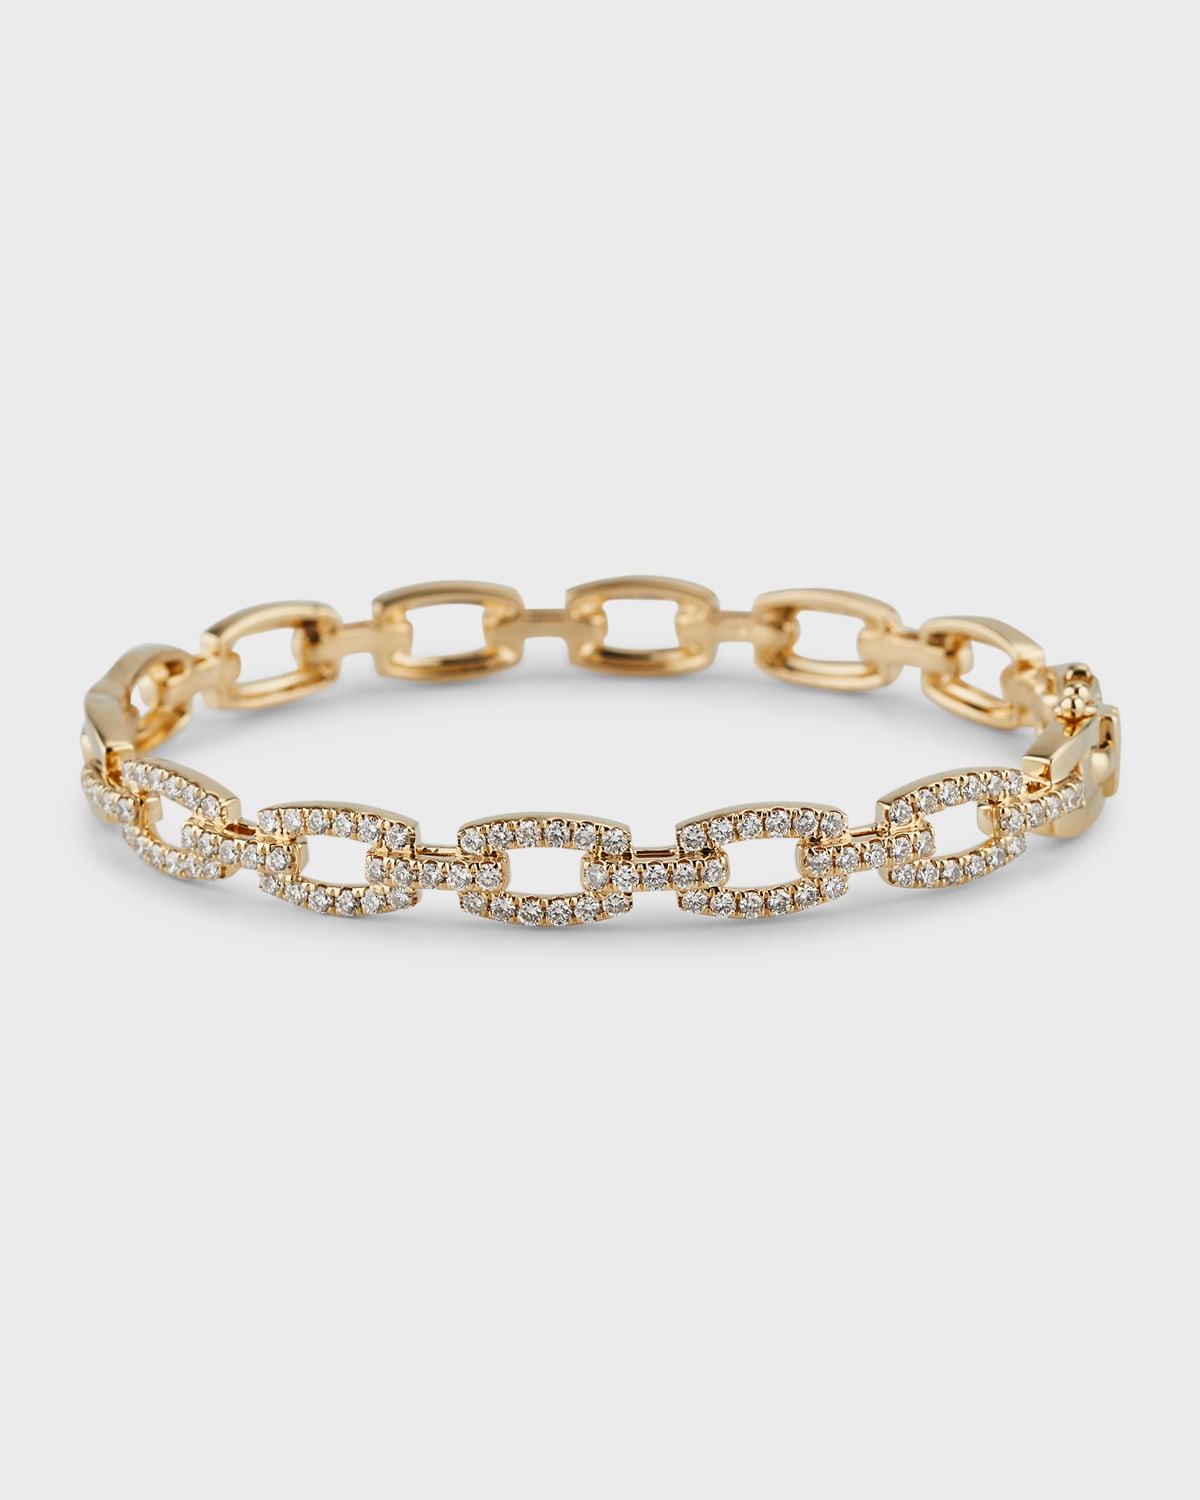 14K Yellow Gold Diamond Link Bangle Bracelet, 15cm